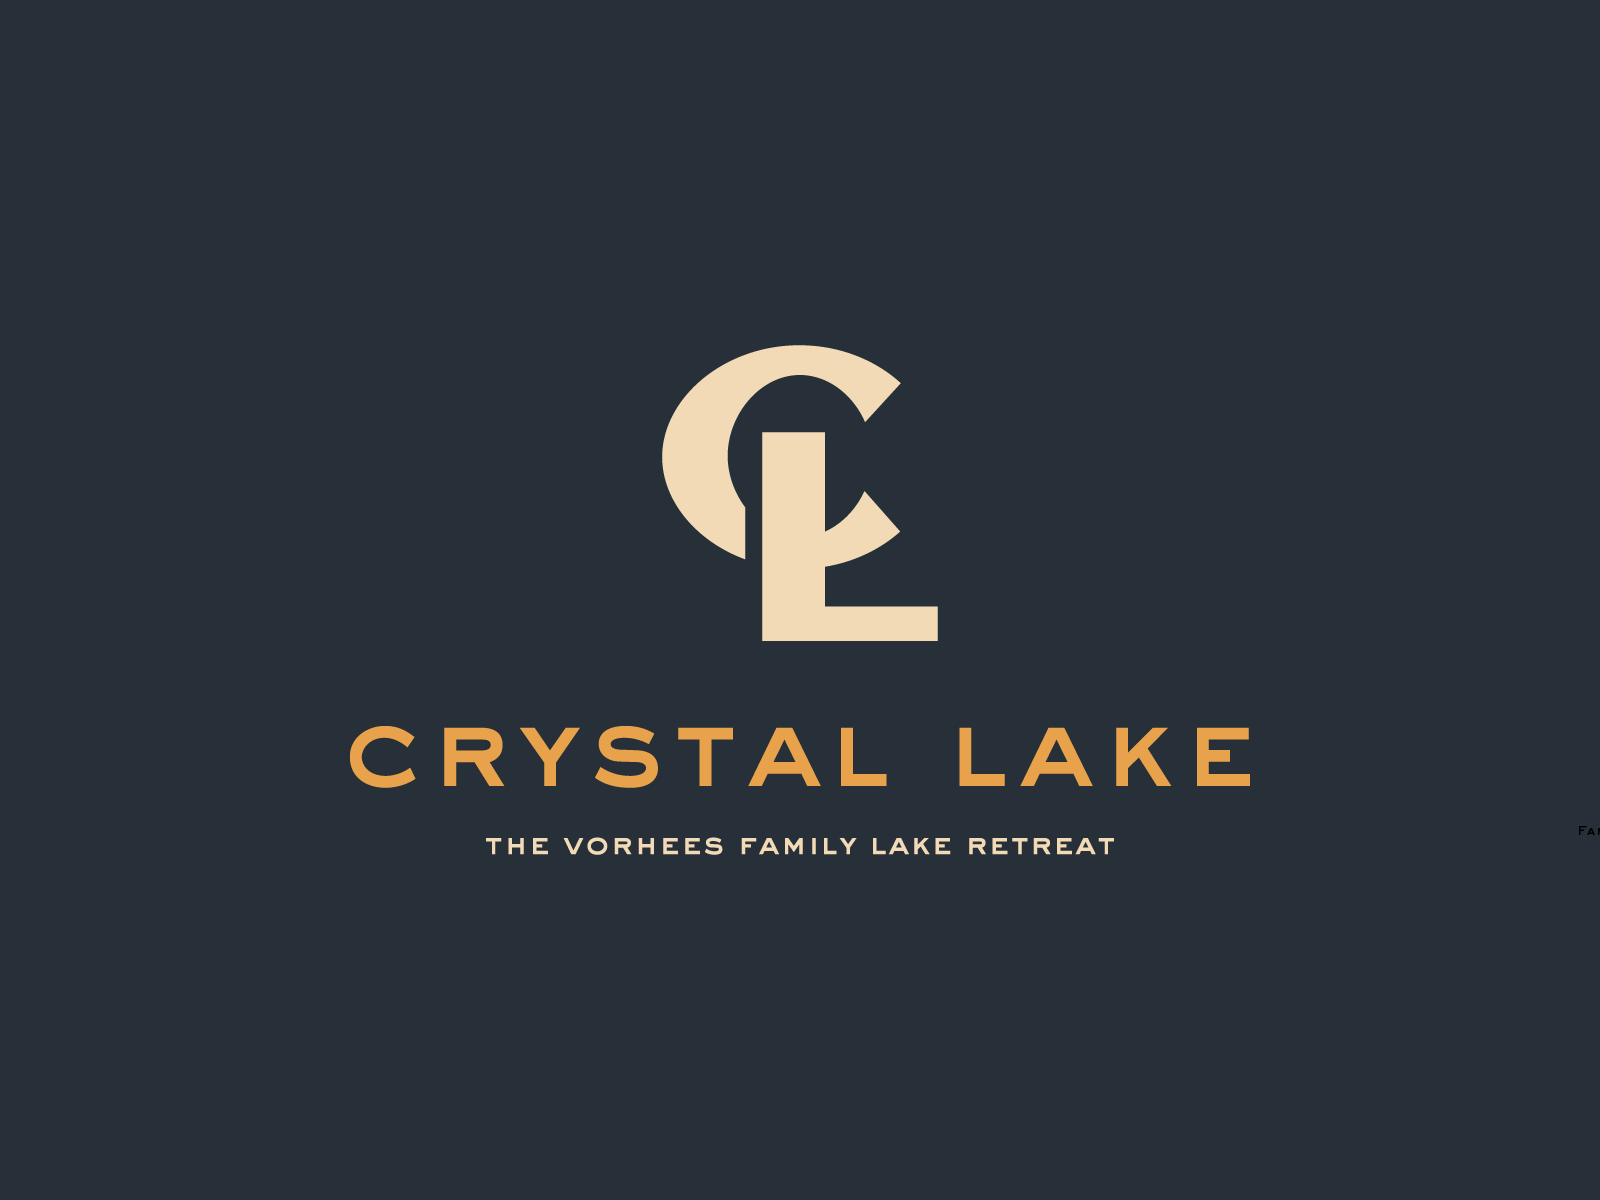 Crystal Lake Family Resort by Ryan Hulseberg on Dribbble